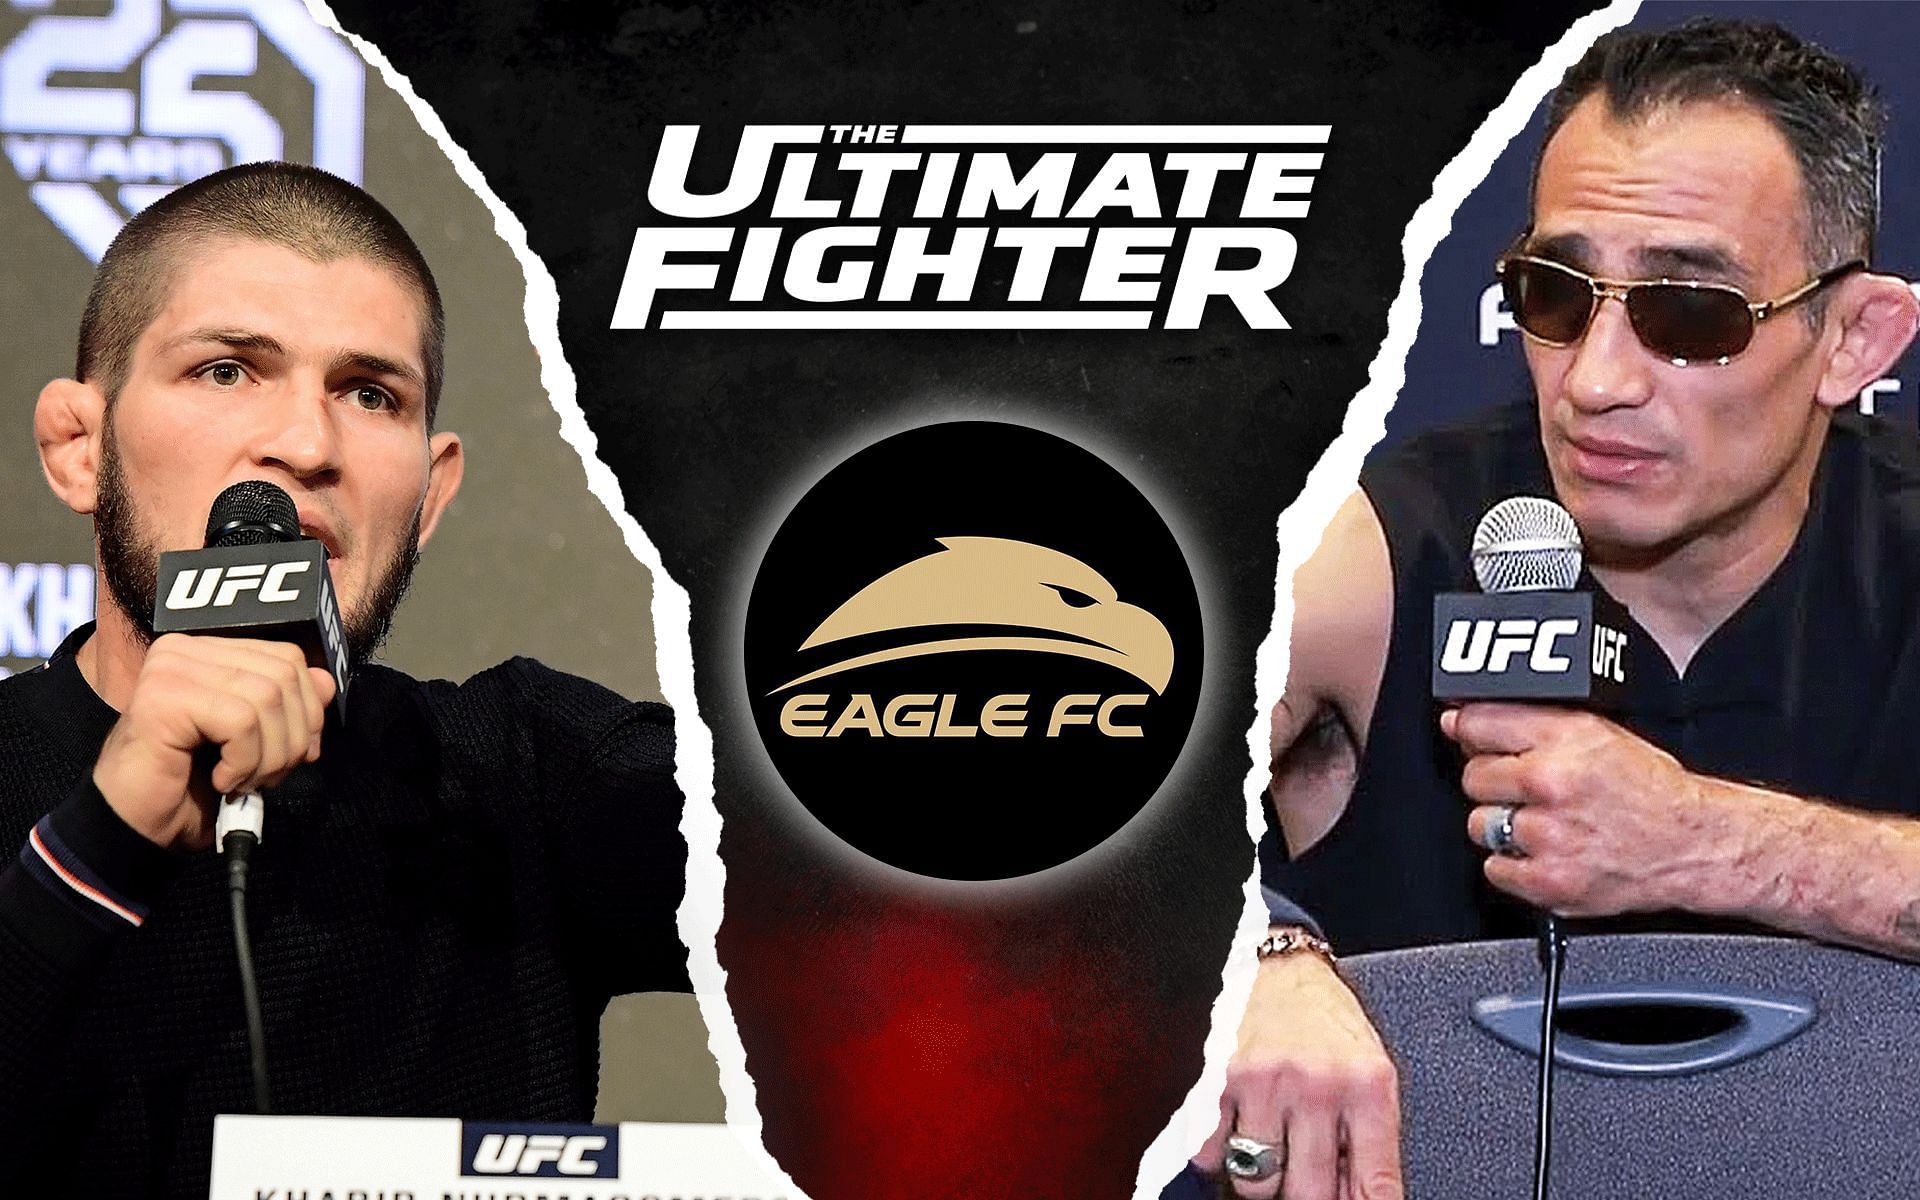 Khabib Nurmagomedov (left) &amp; Tony Ferguson (right) [Image Credits- @UFC on YouTube, @eagle.fightclub &amp; @ultimatefighter on Instagram]